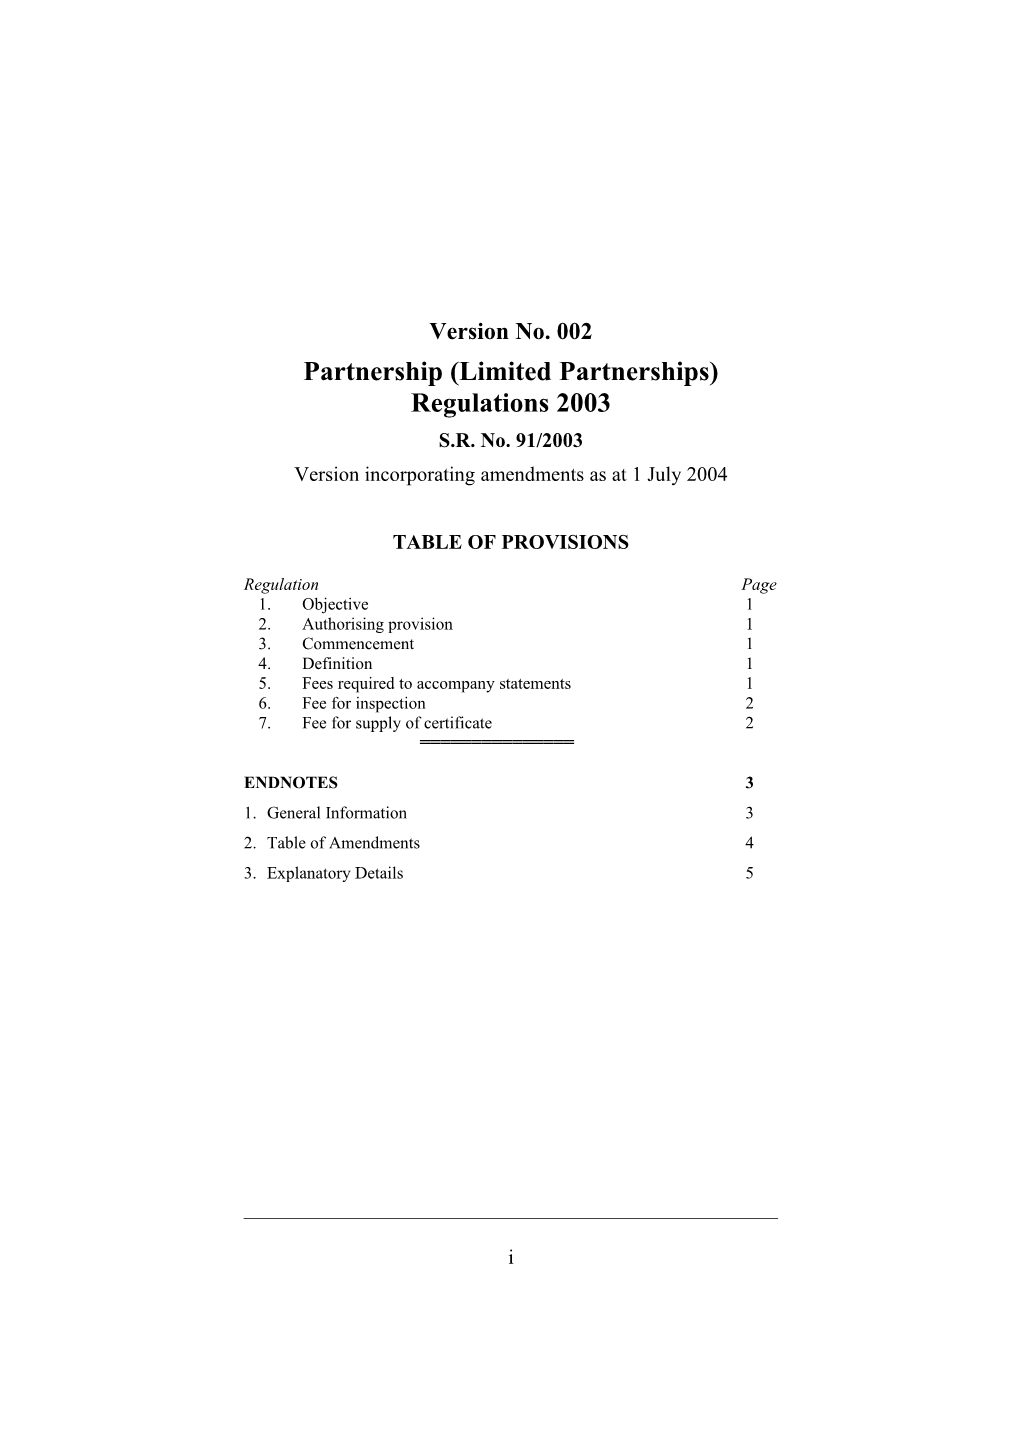 Partnership (Limited Partnerships) Regulations 2003